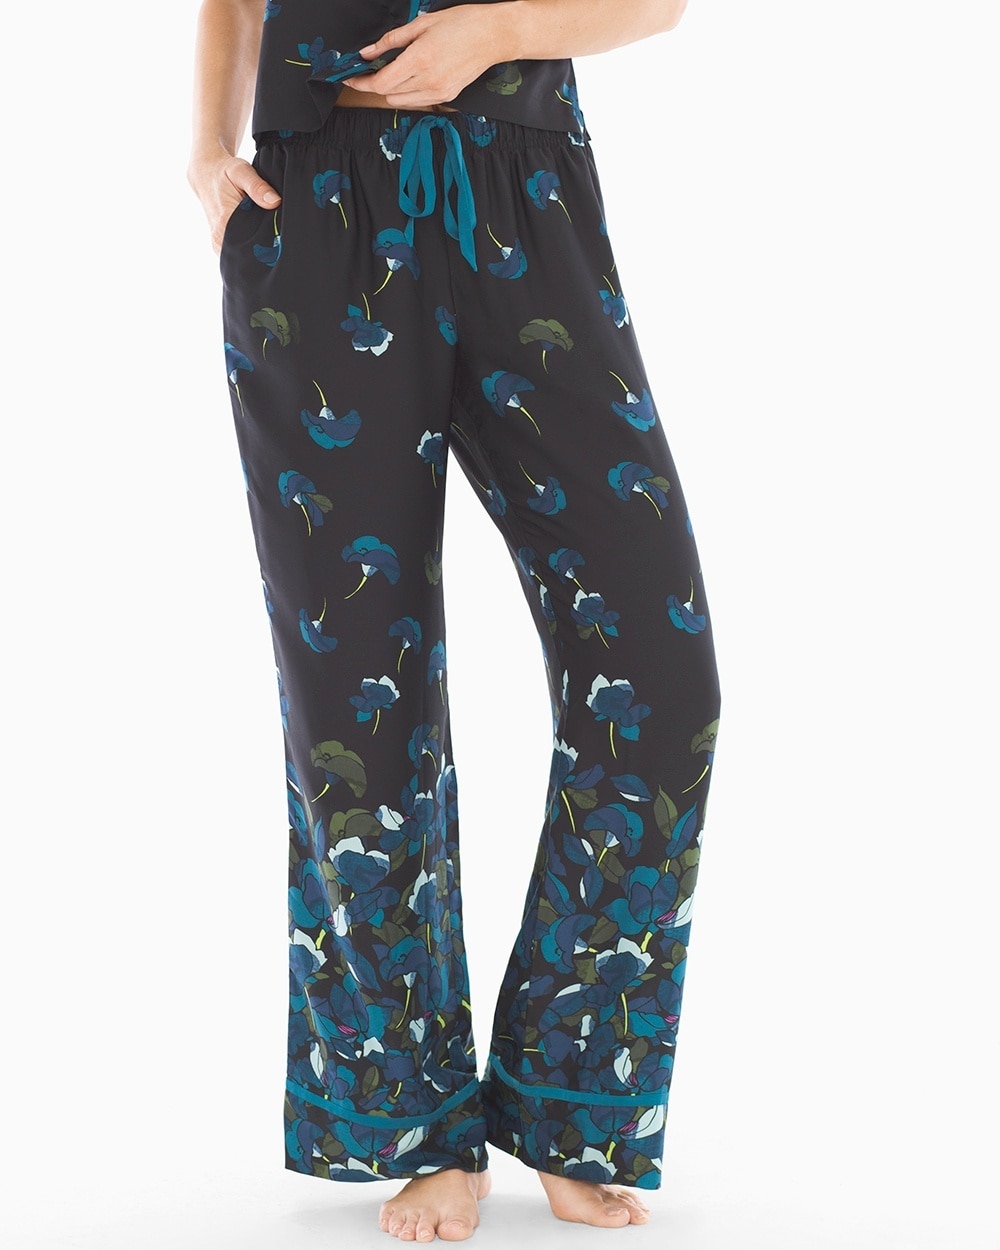 Satin Pajama Pants Poetic Floral Black